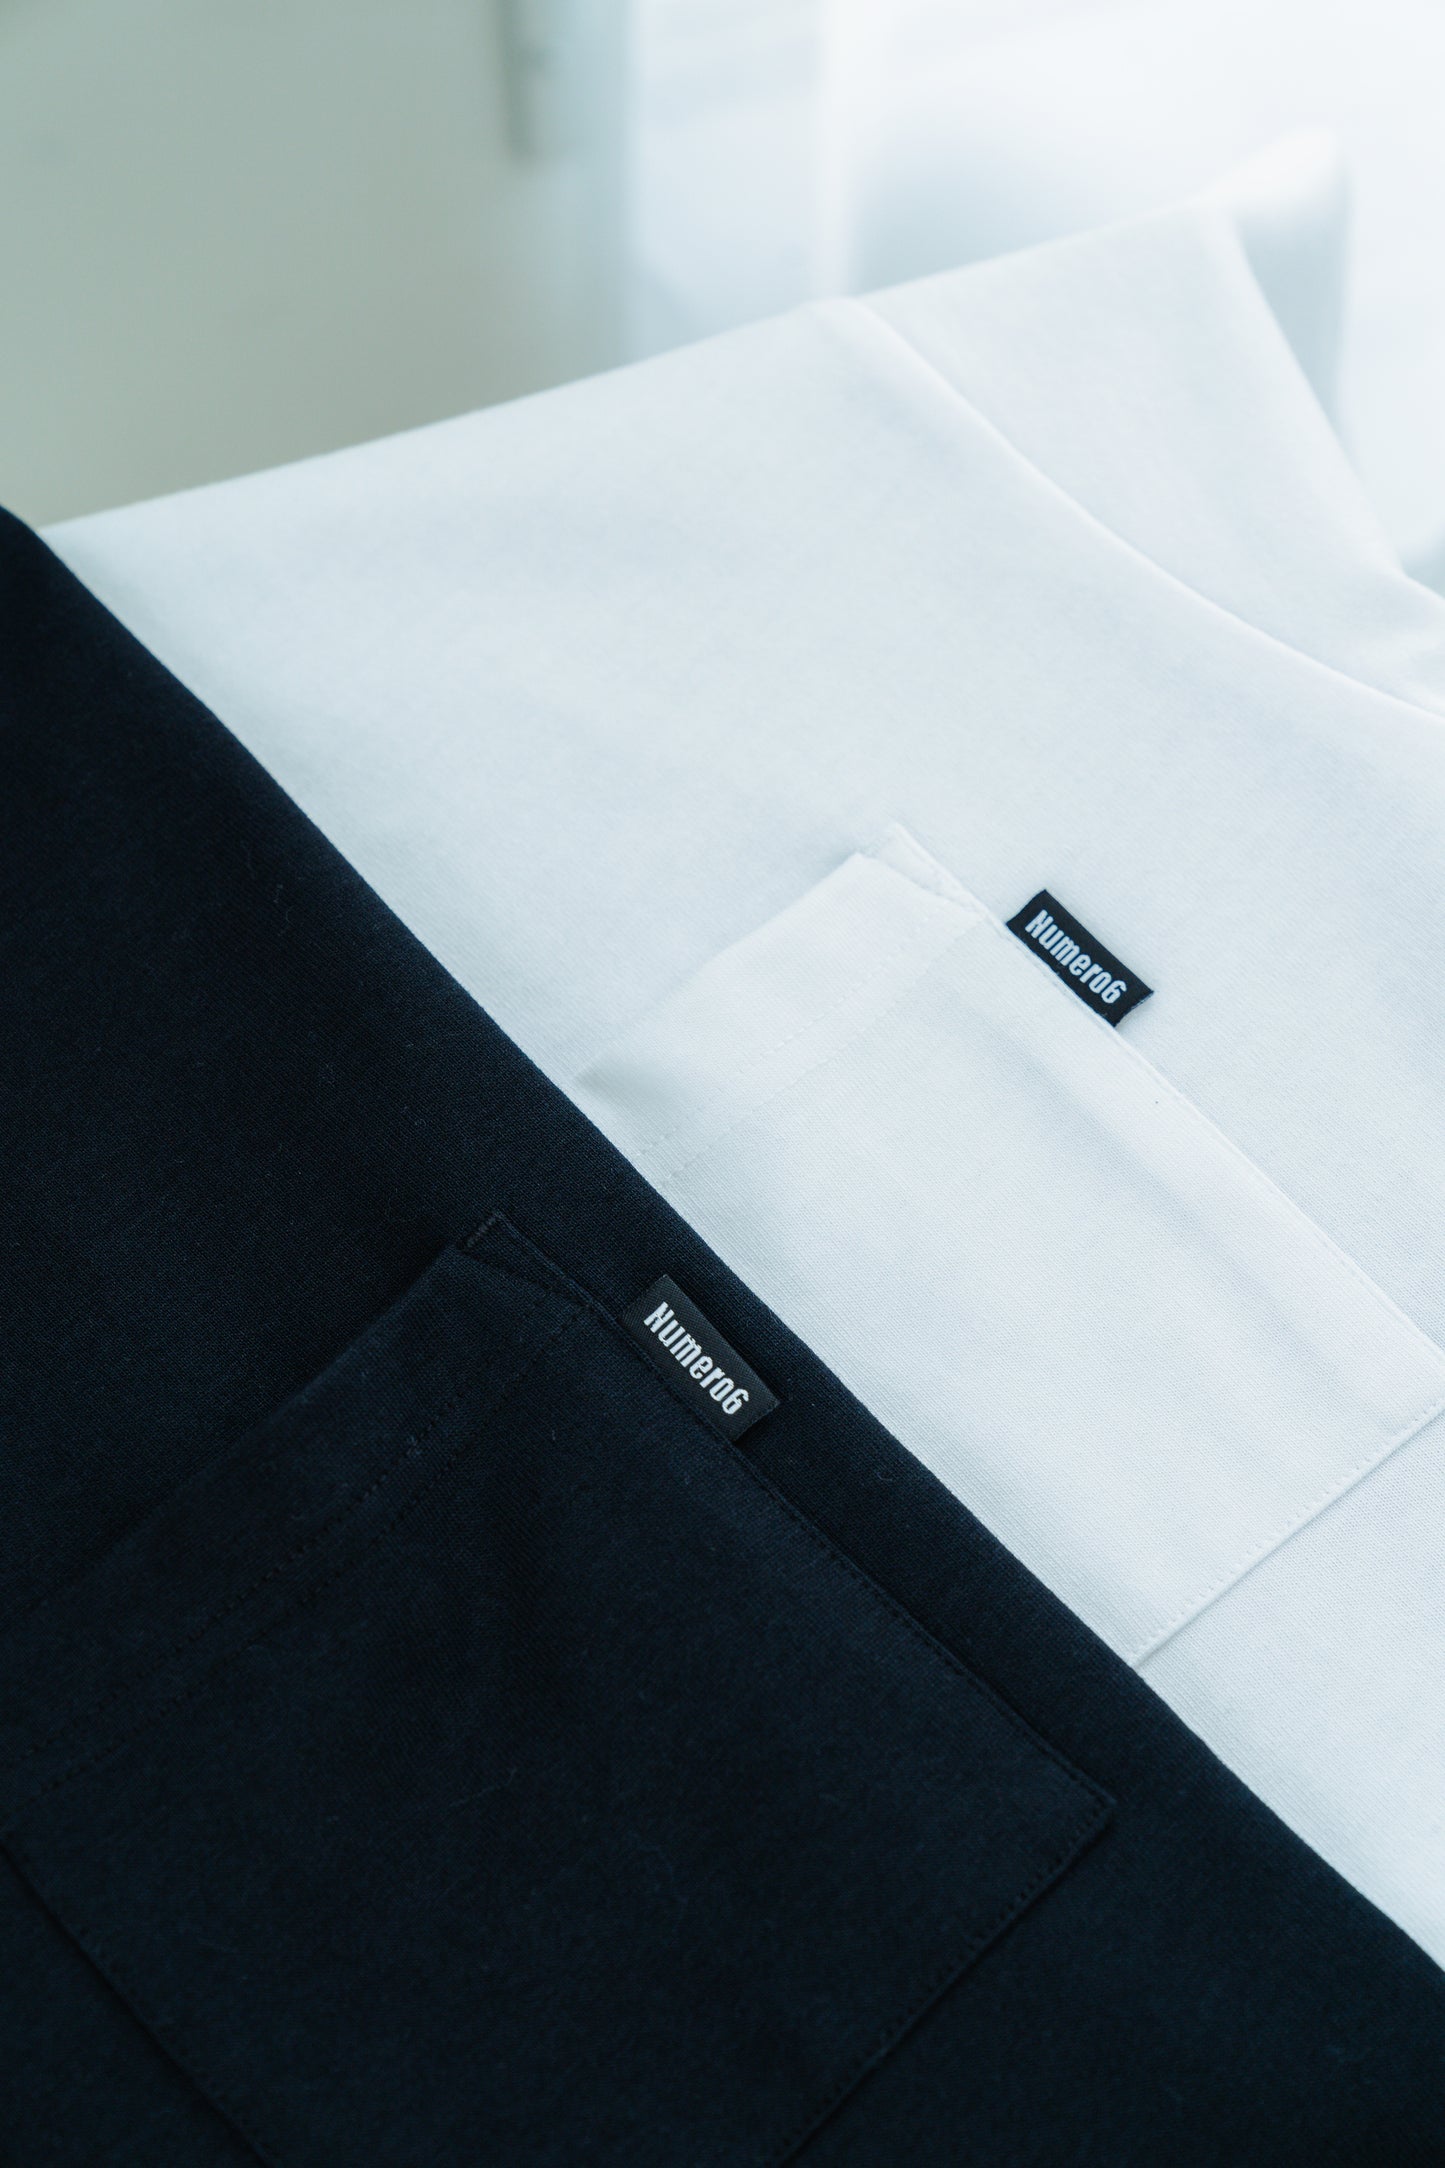 N6 Long sleeve Pocket T-Shirts【BLACK】(N624-002)